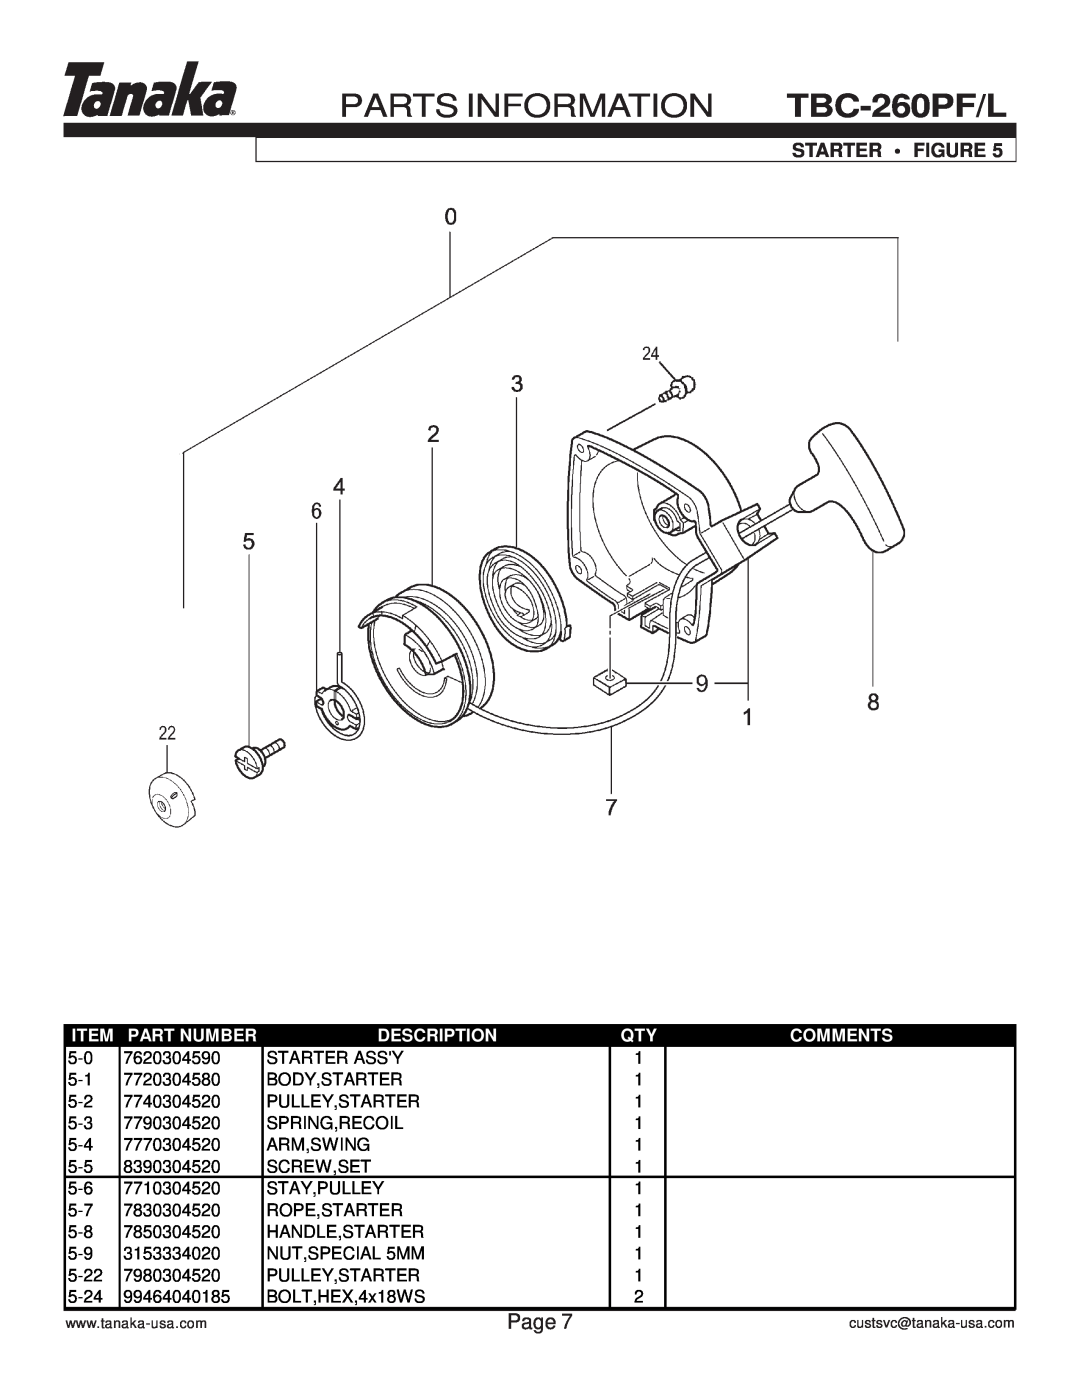 Tanaka TBC-260PF/L manual Starter Figure, Parts Information, Page, Part Number, Description, Comments 